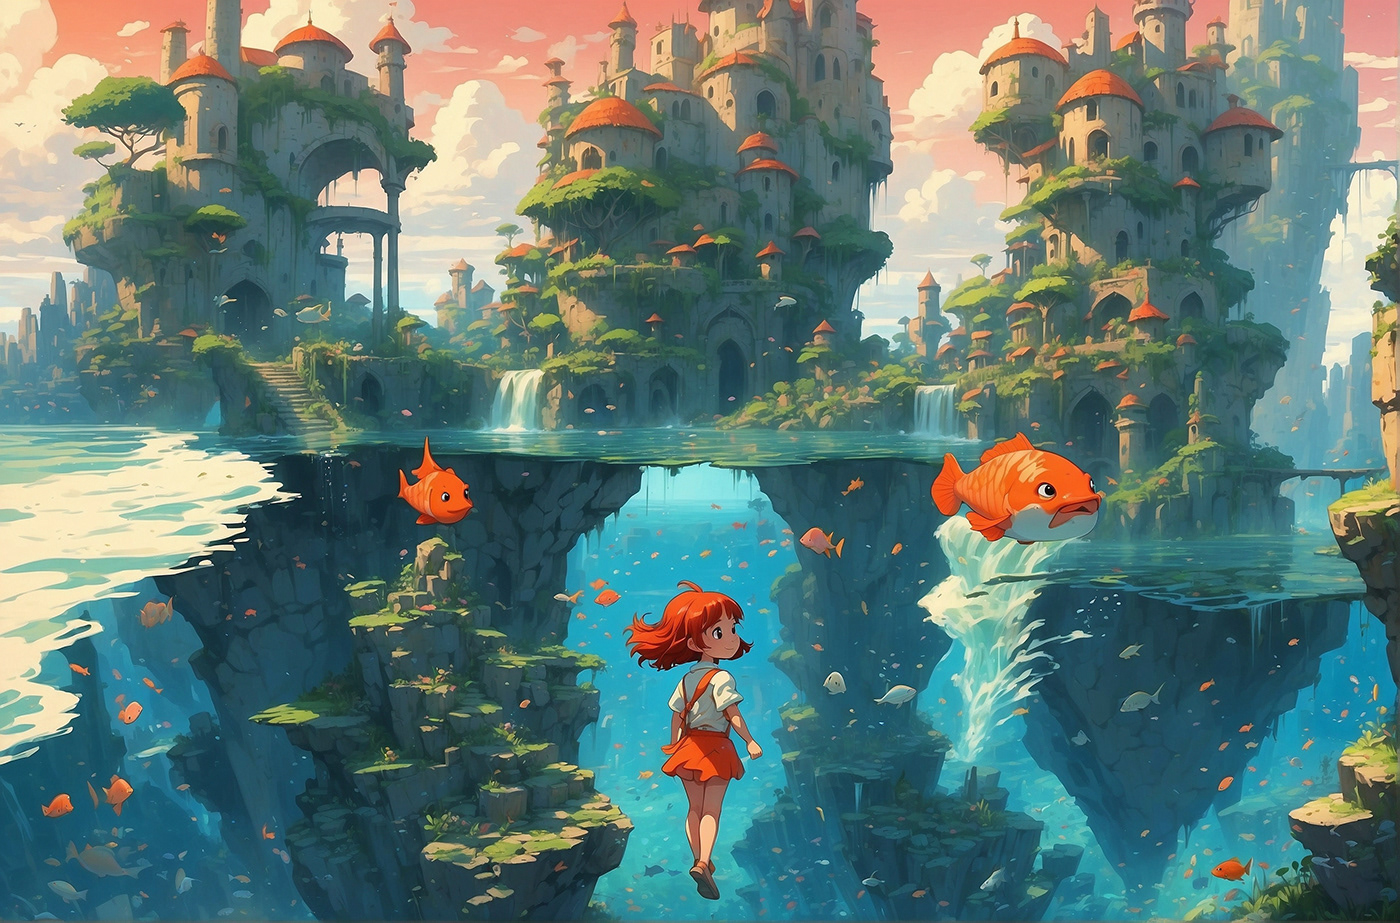 Ghibli studioghibli ponyo chibi anime nautical Moana mermaid fairytale fantasy Ocean sea life creatures wonderful